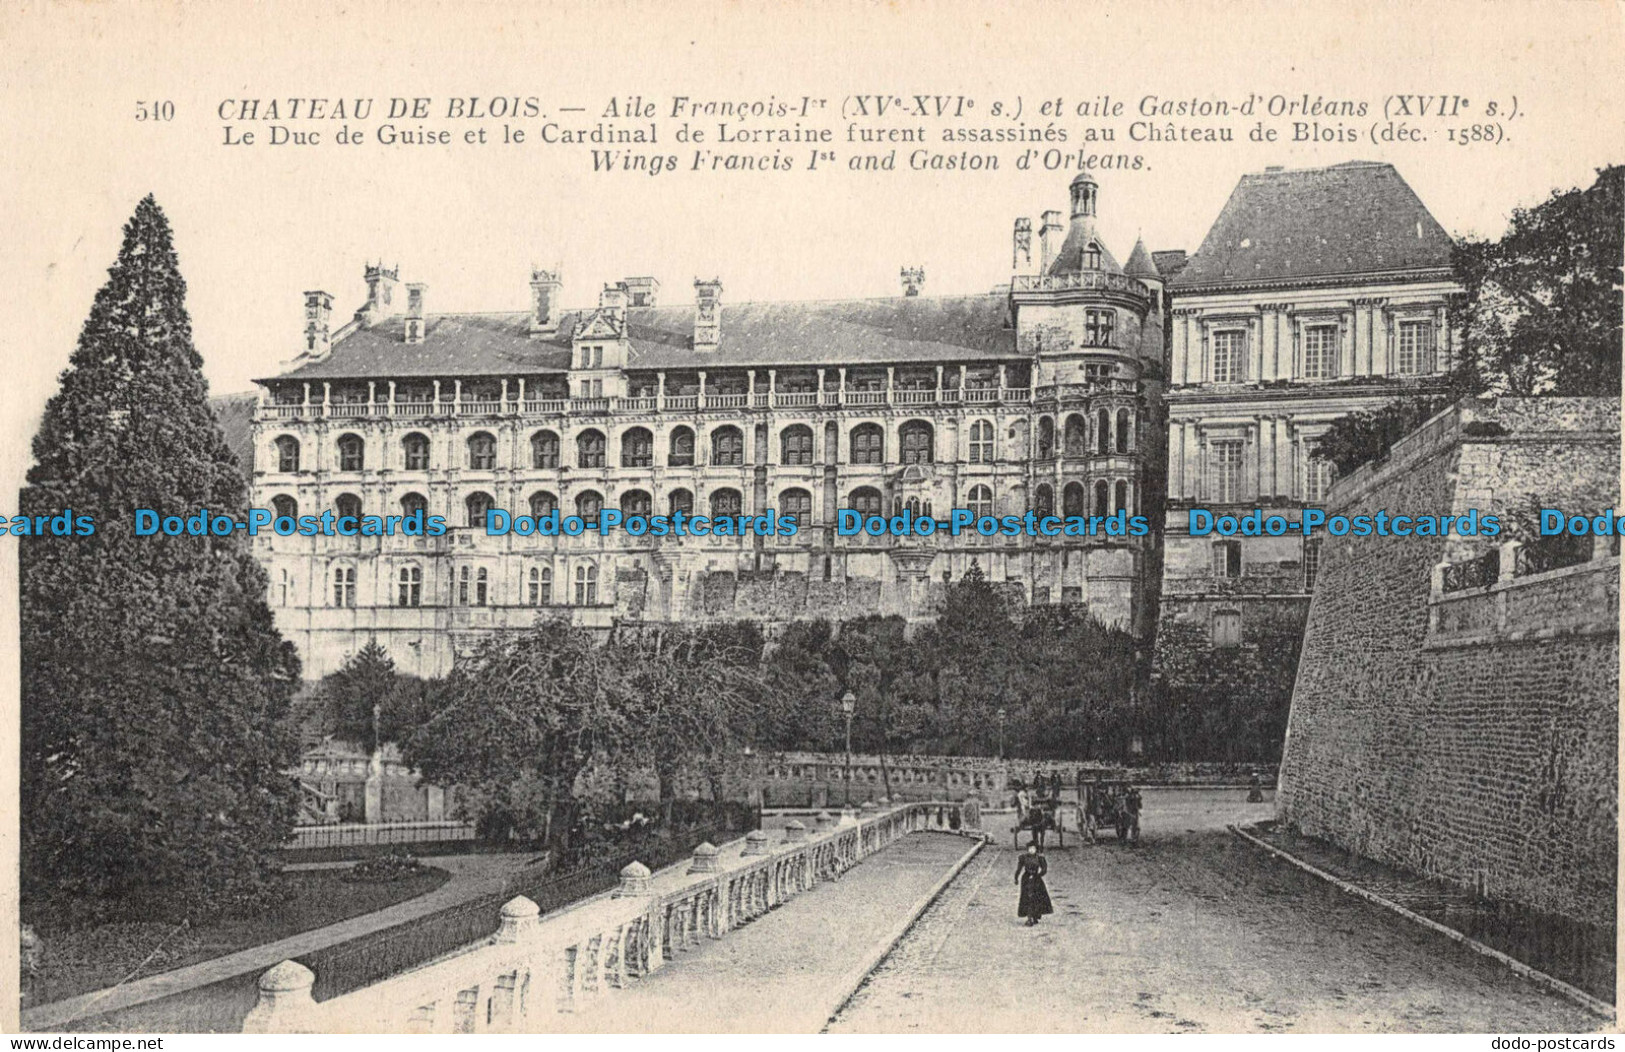 R094346 Chateau De Blois. Wings Francis Ist And Gaston D Orleans. No 540 - World